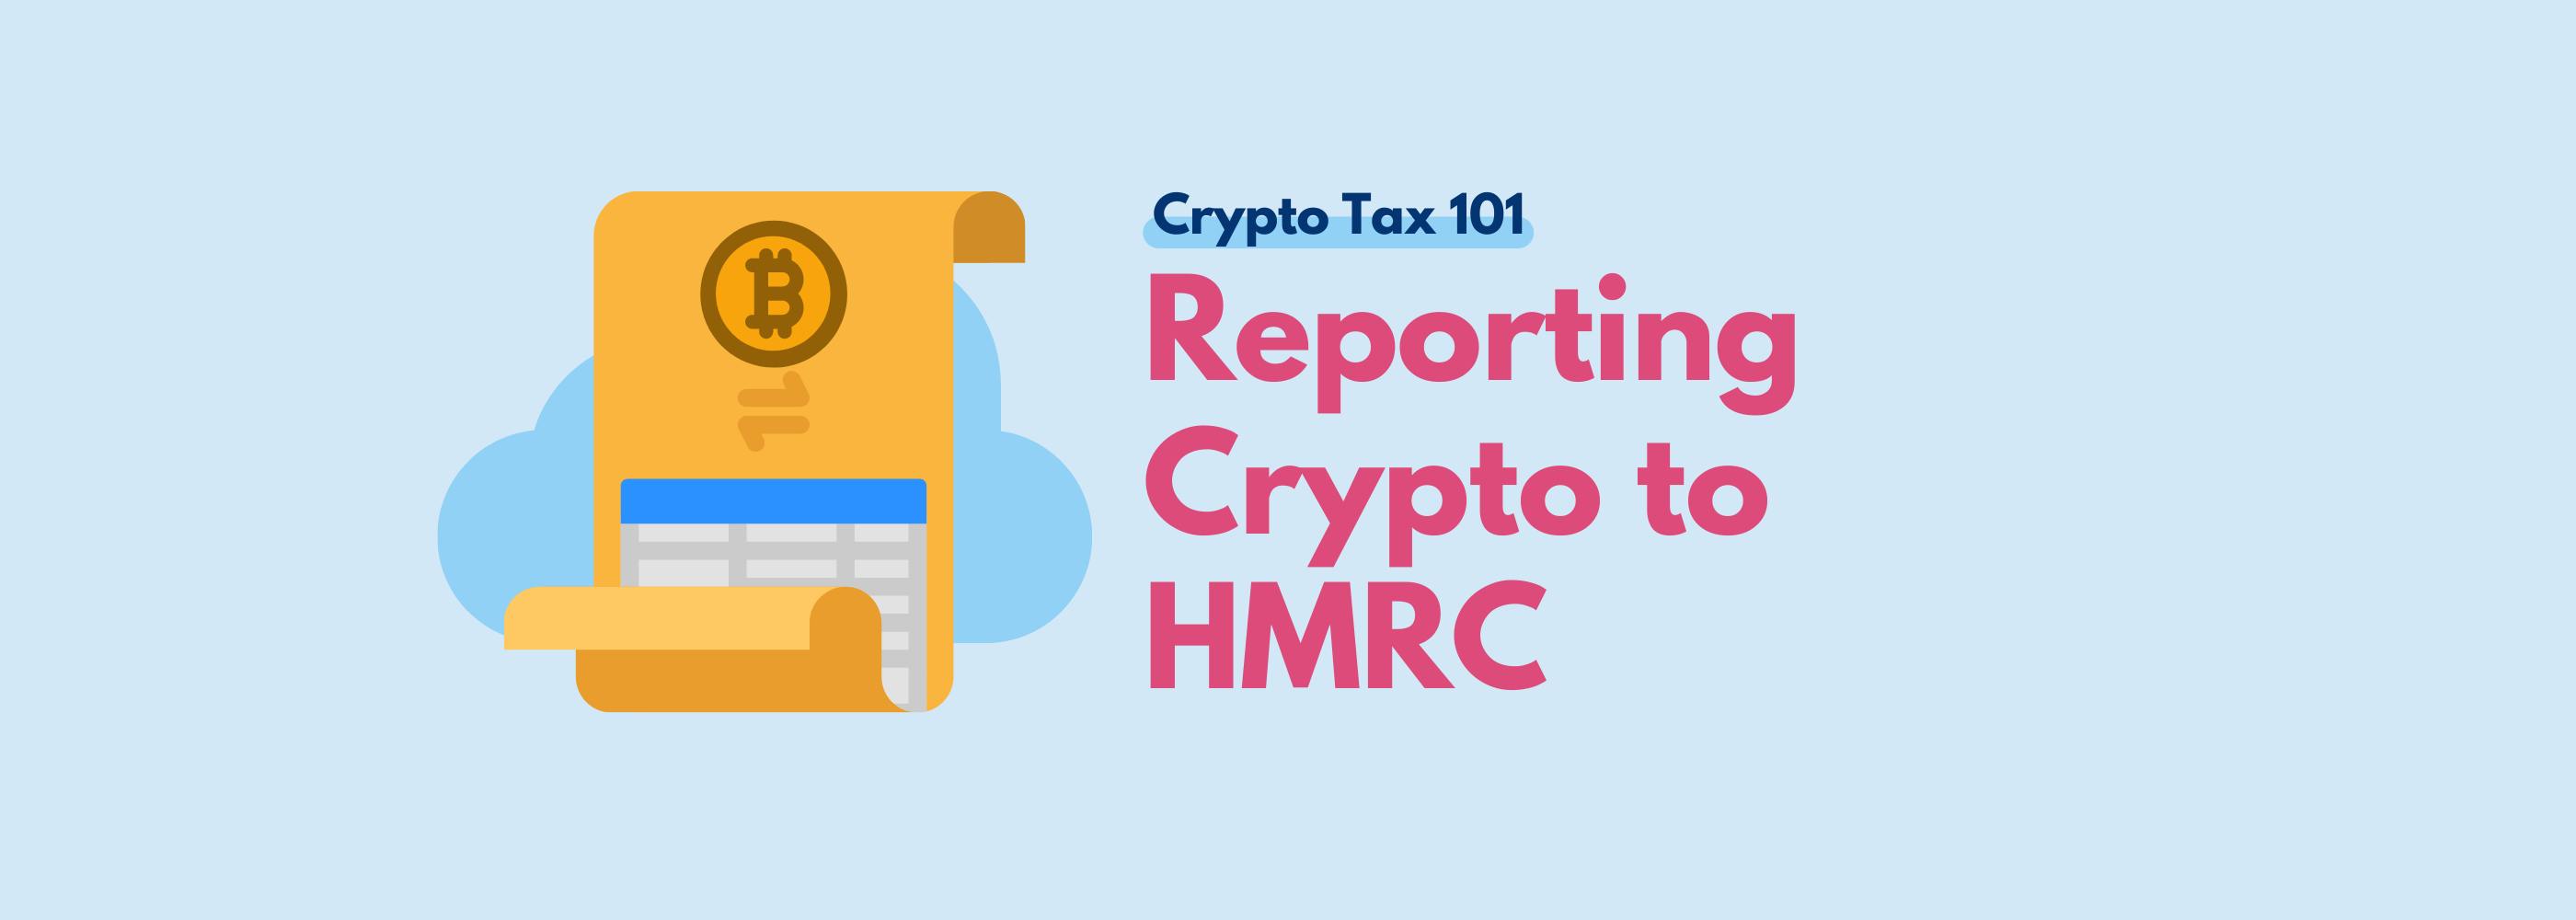 Call Hmrc Tax Return